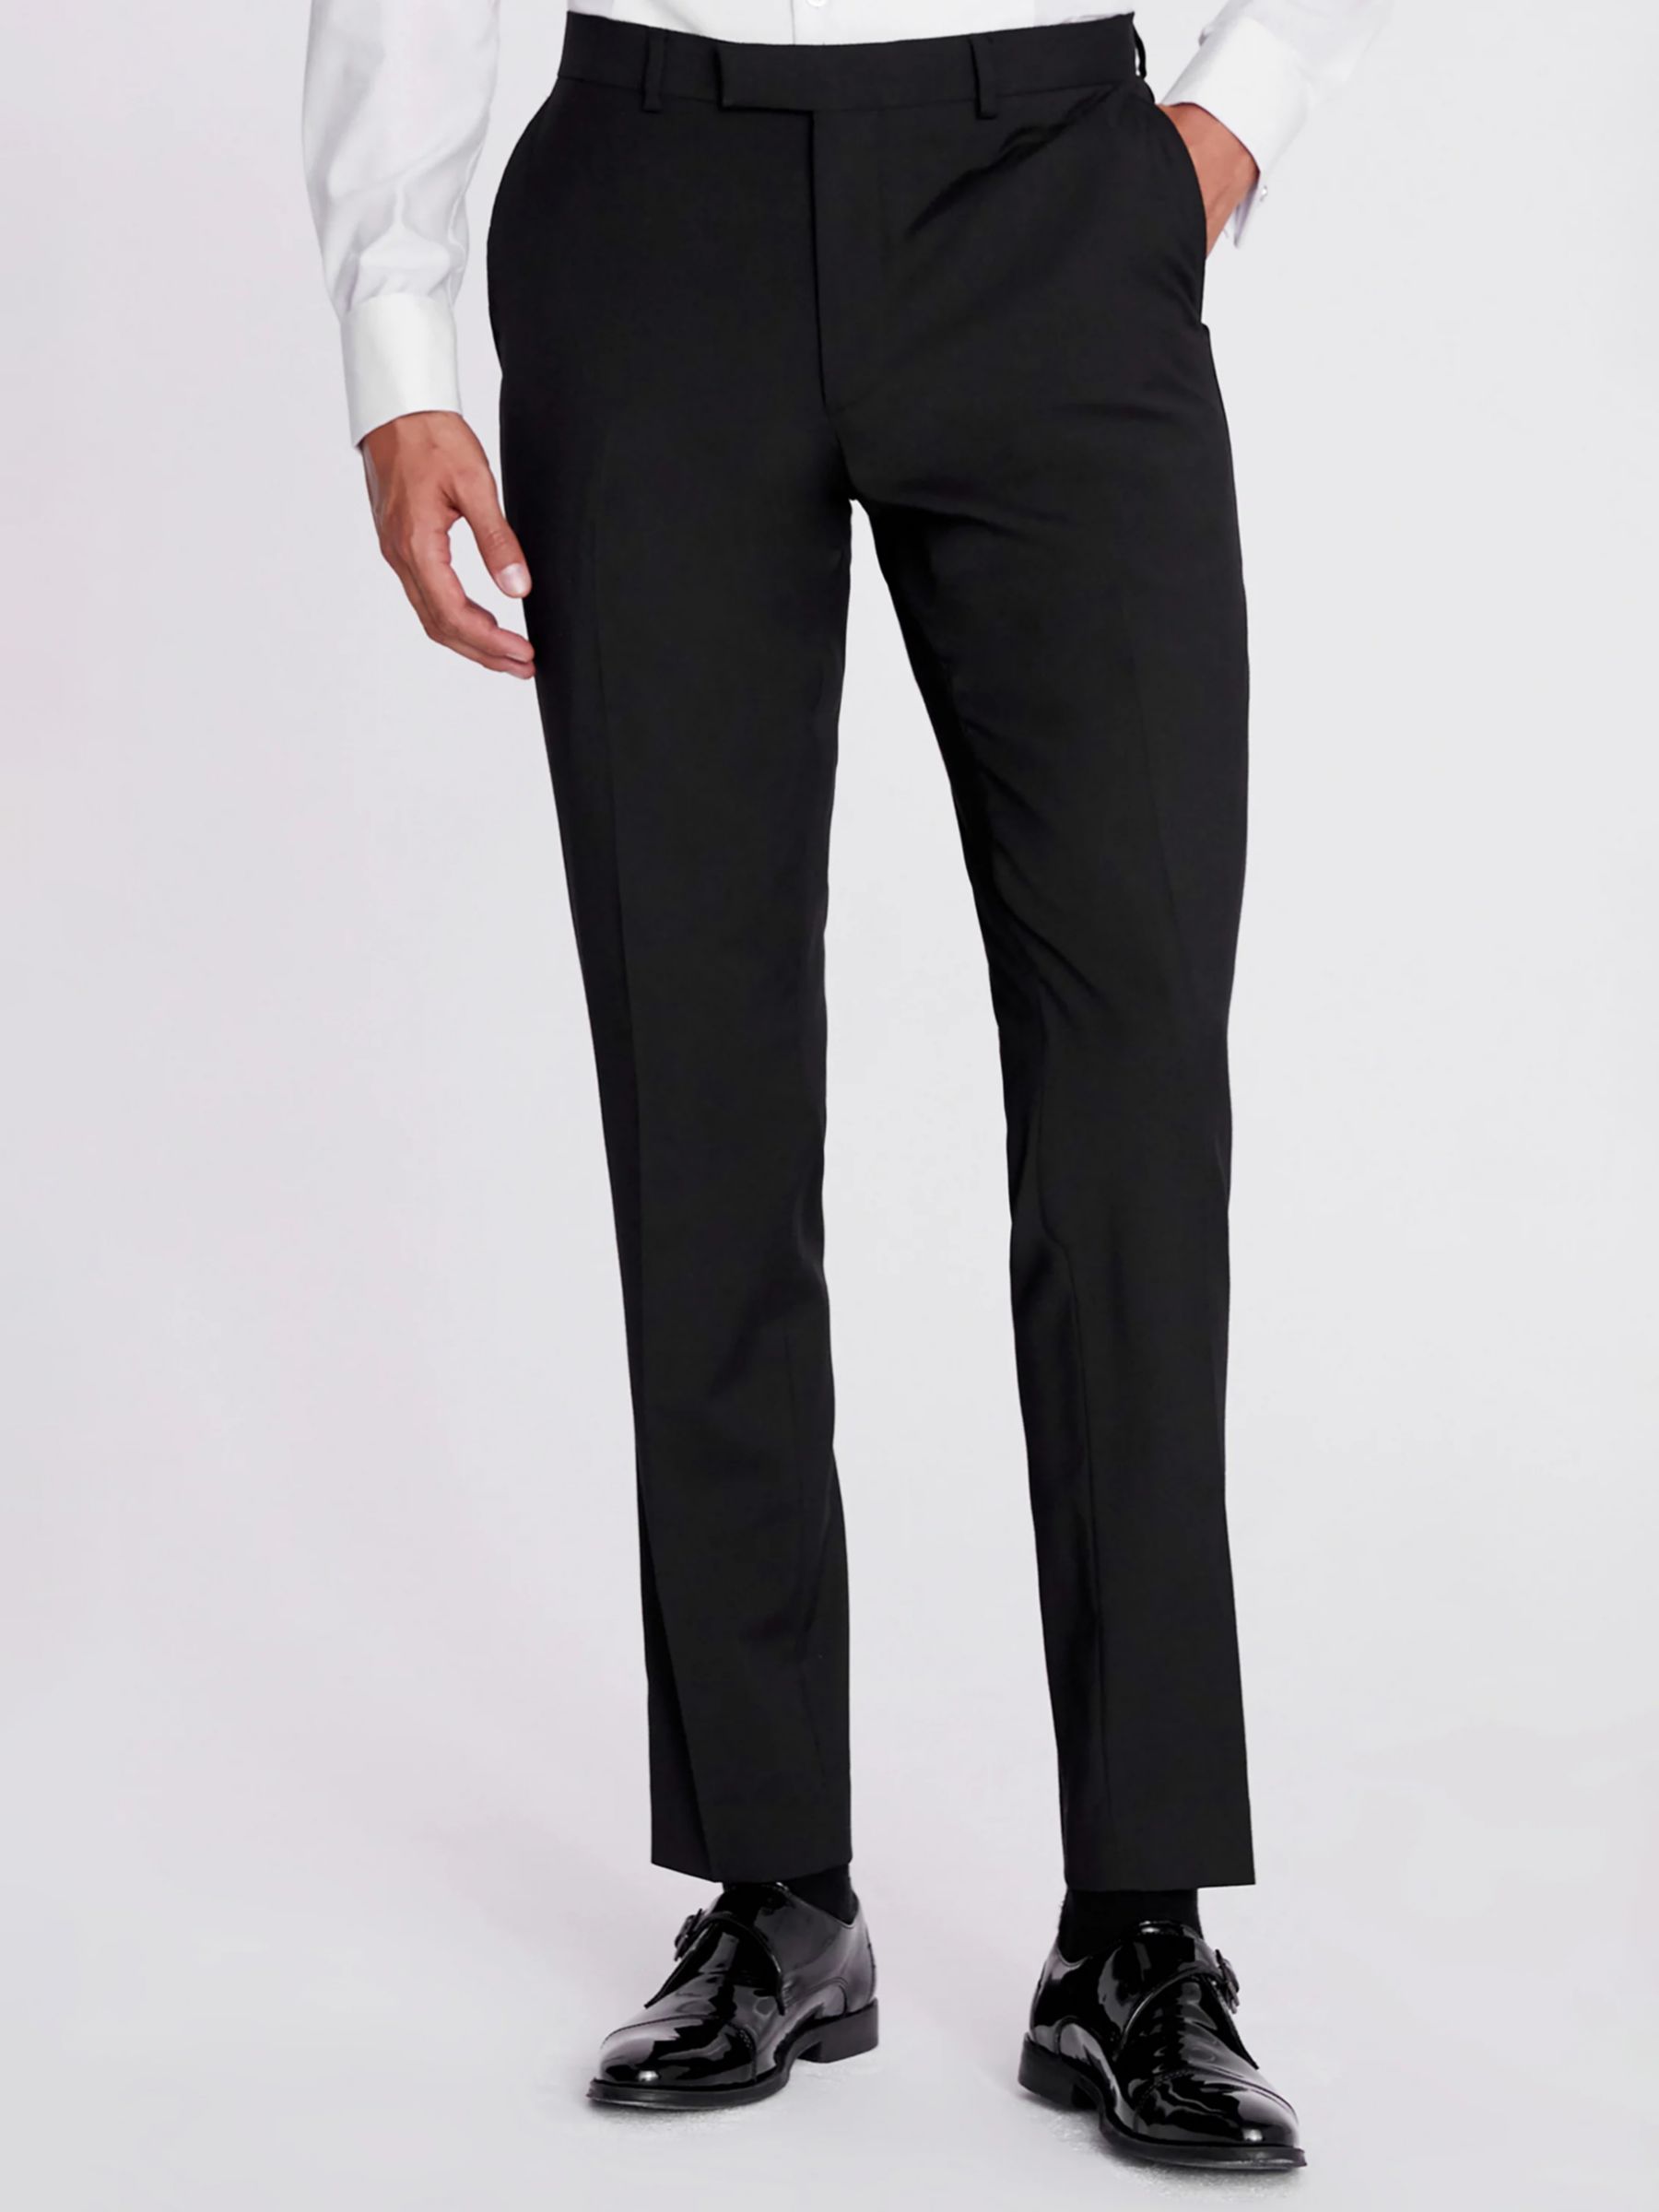 Moss London Slim Fit Dress Trousers, Black at John Lewis & Partners